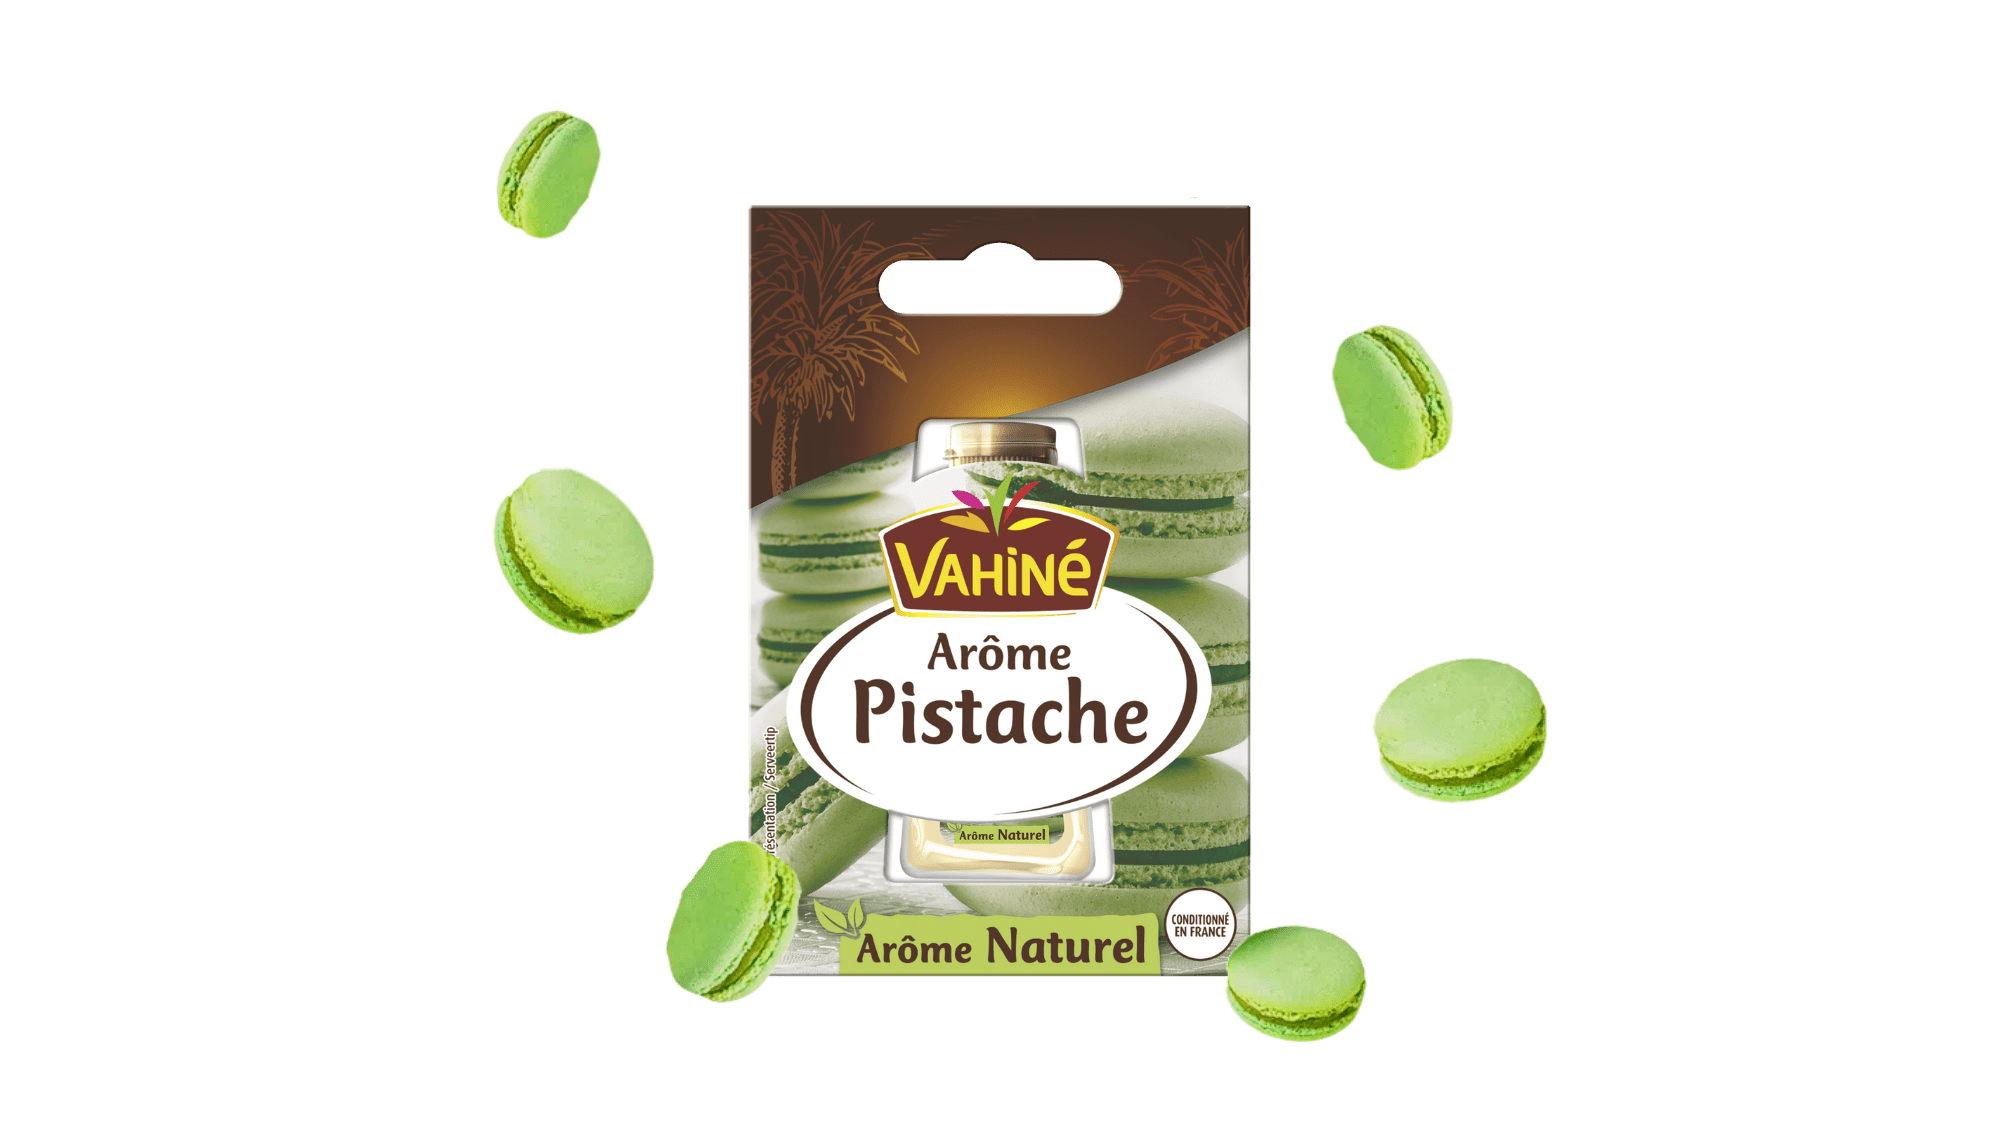 Arome Pistache Vahine